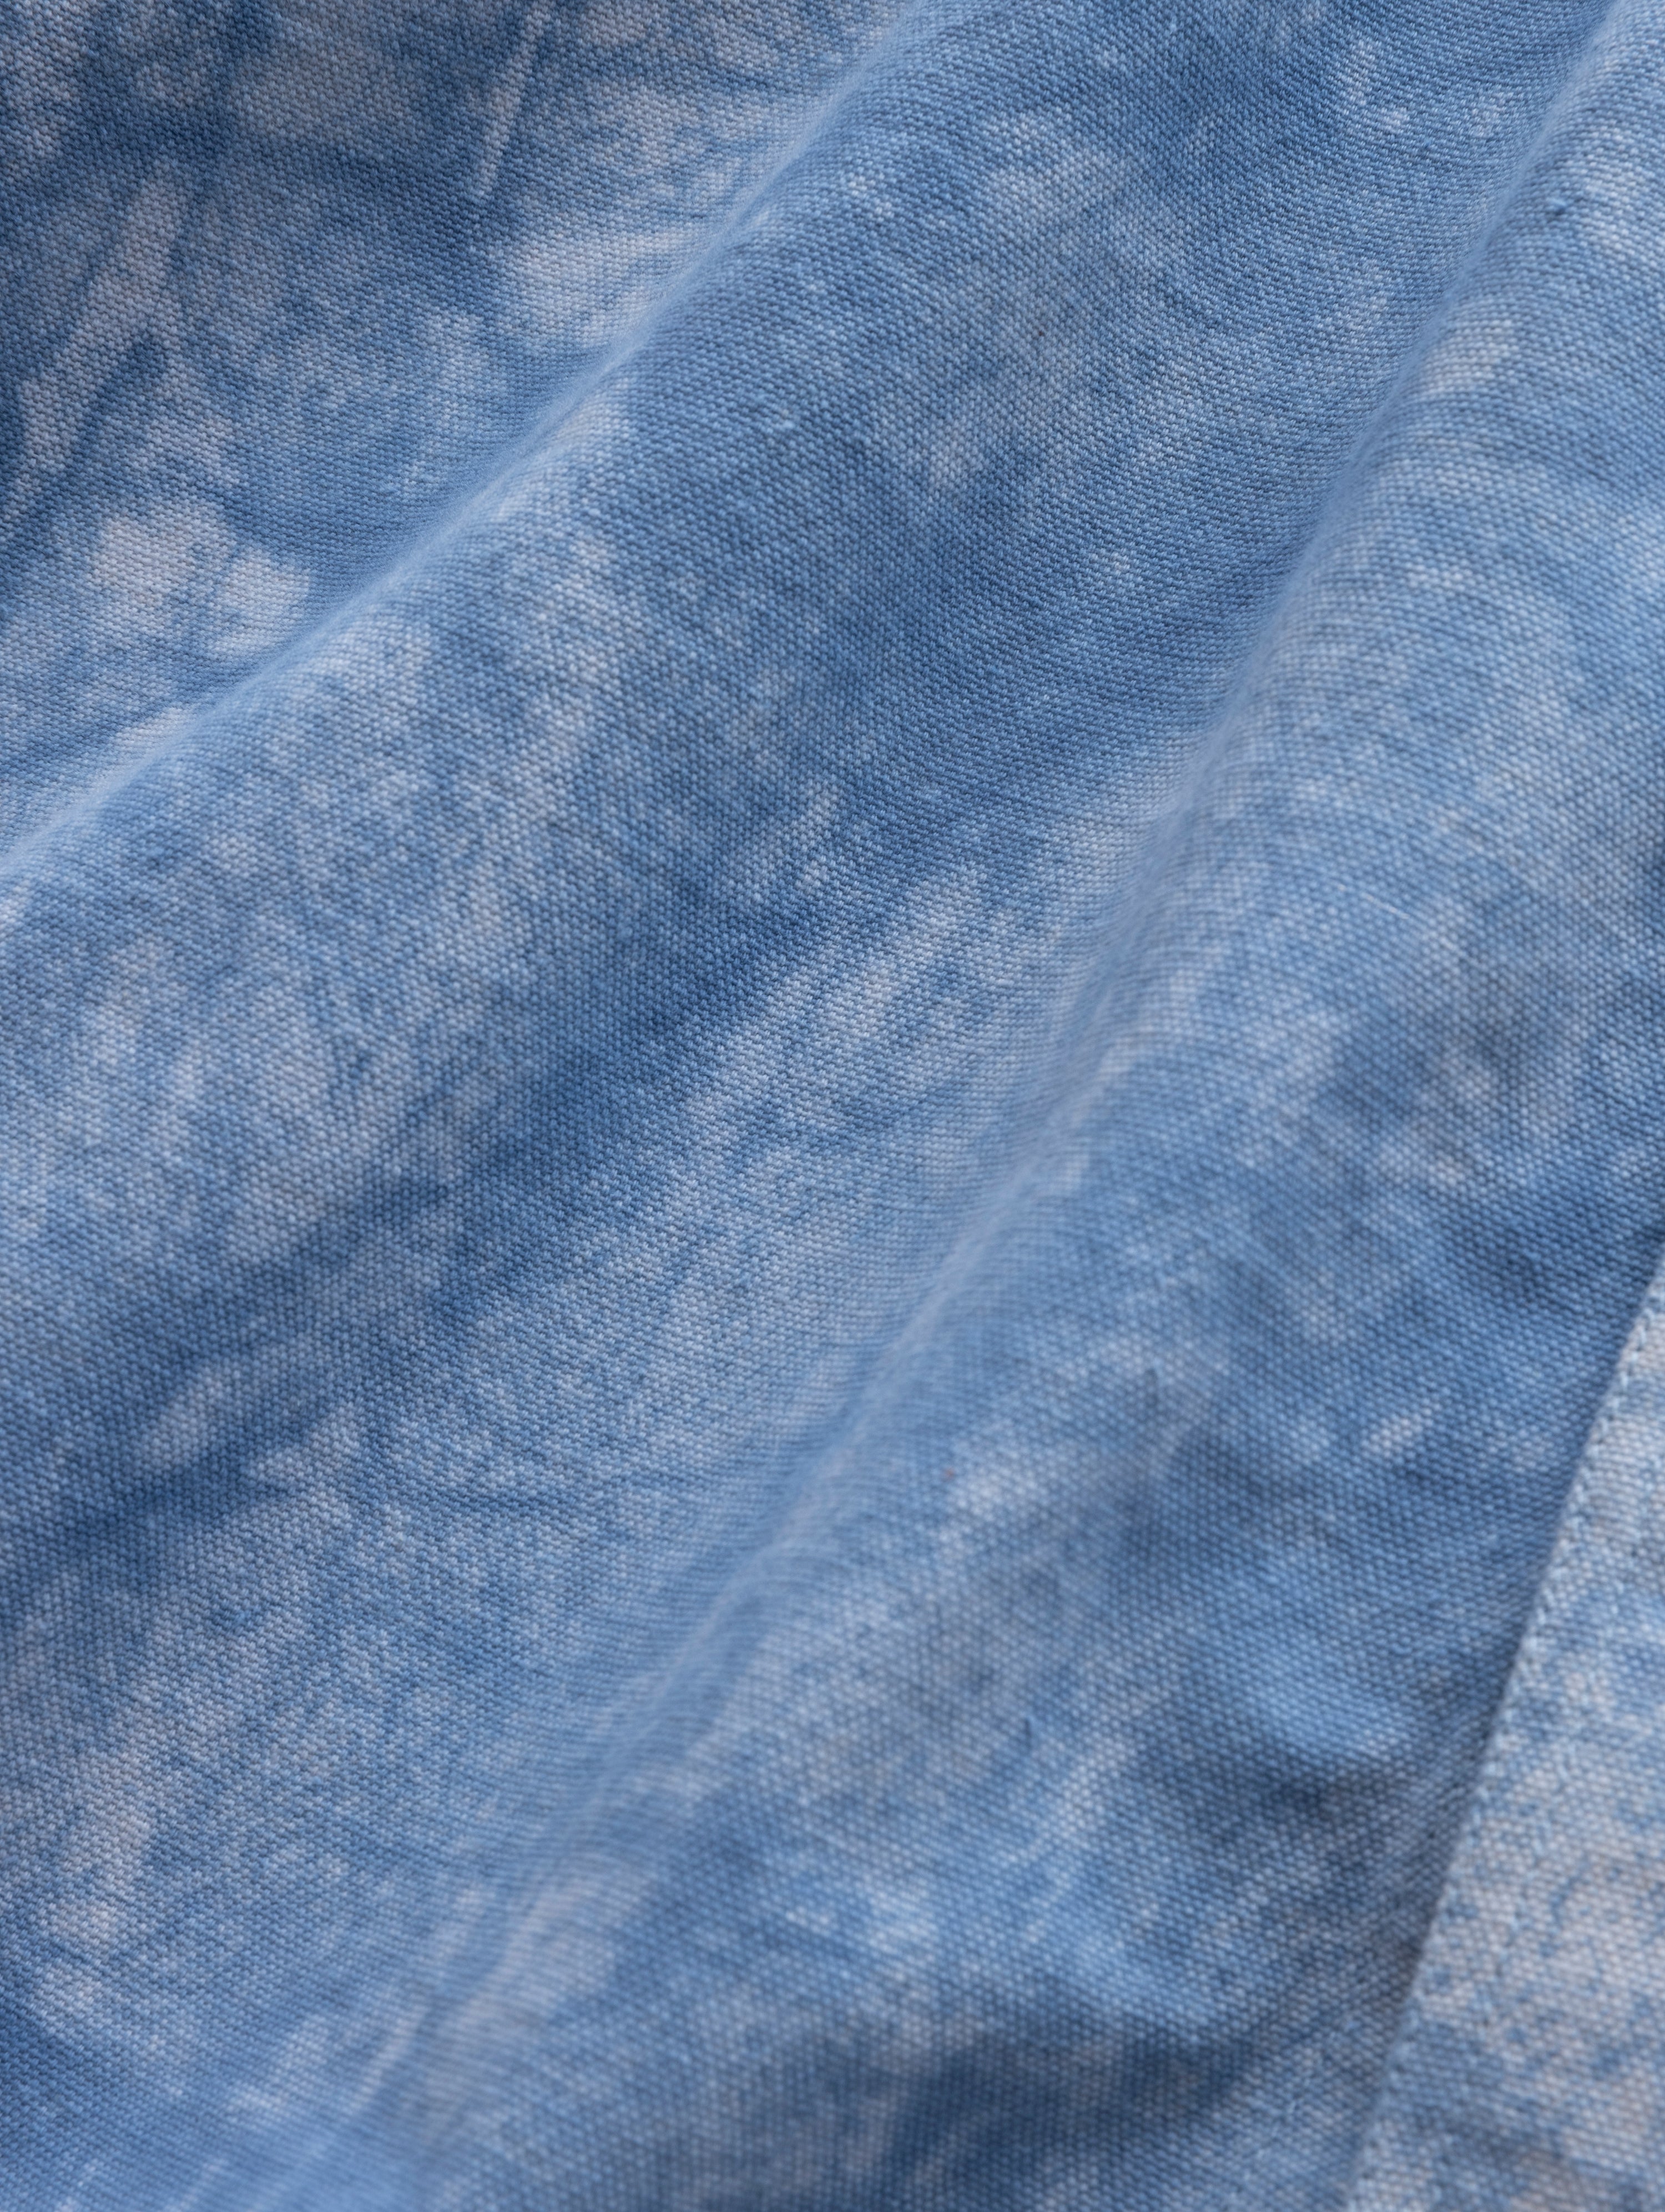 WOLF BUTTON-DOWN SHIRT - INFINITY BLUE DABU DYED OXFORD CLOTH